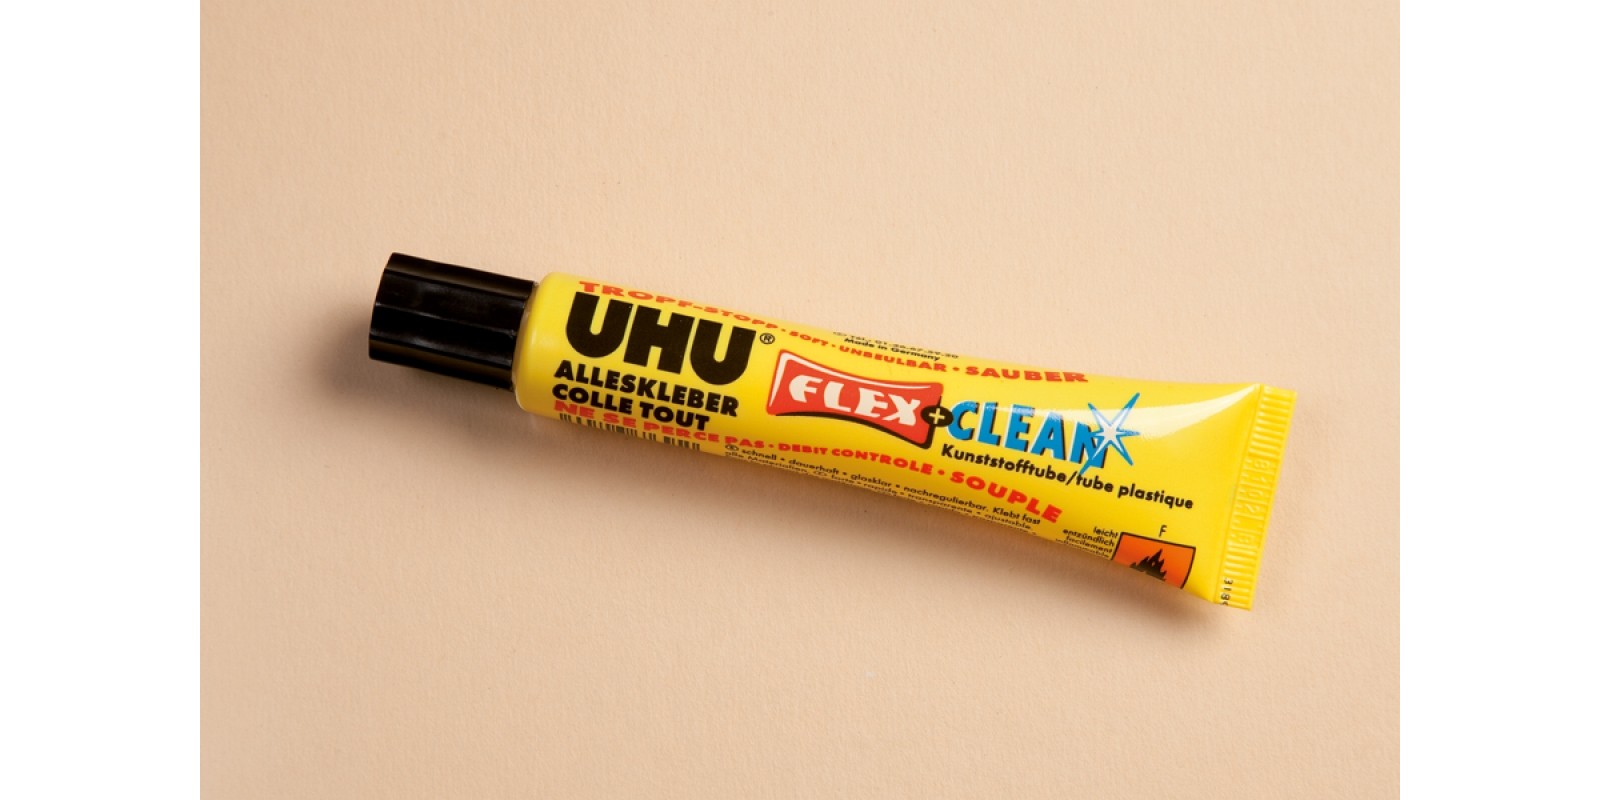 AU53514 UHU universal adhesive